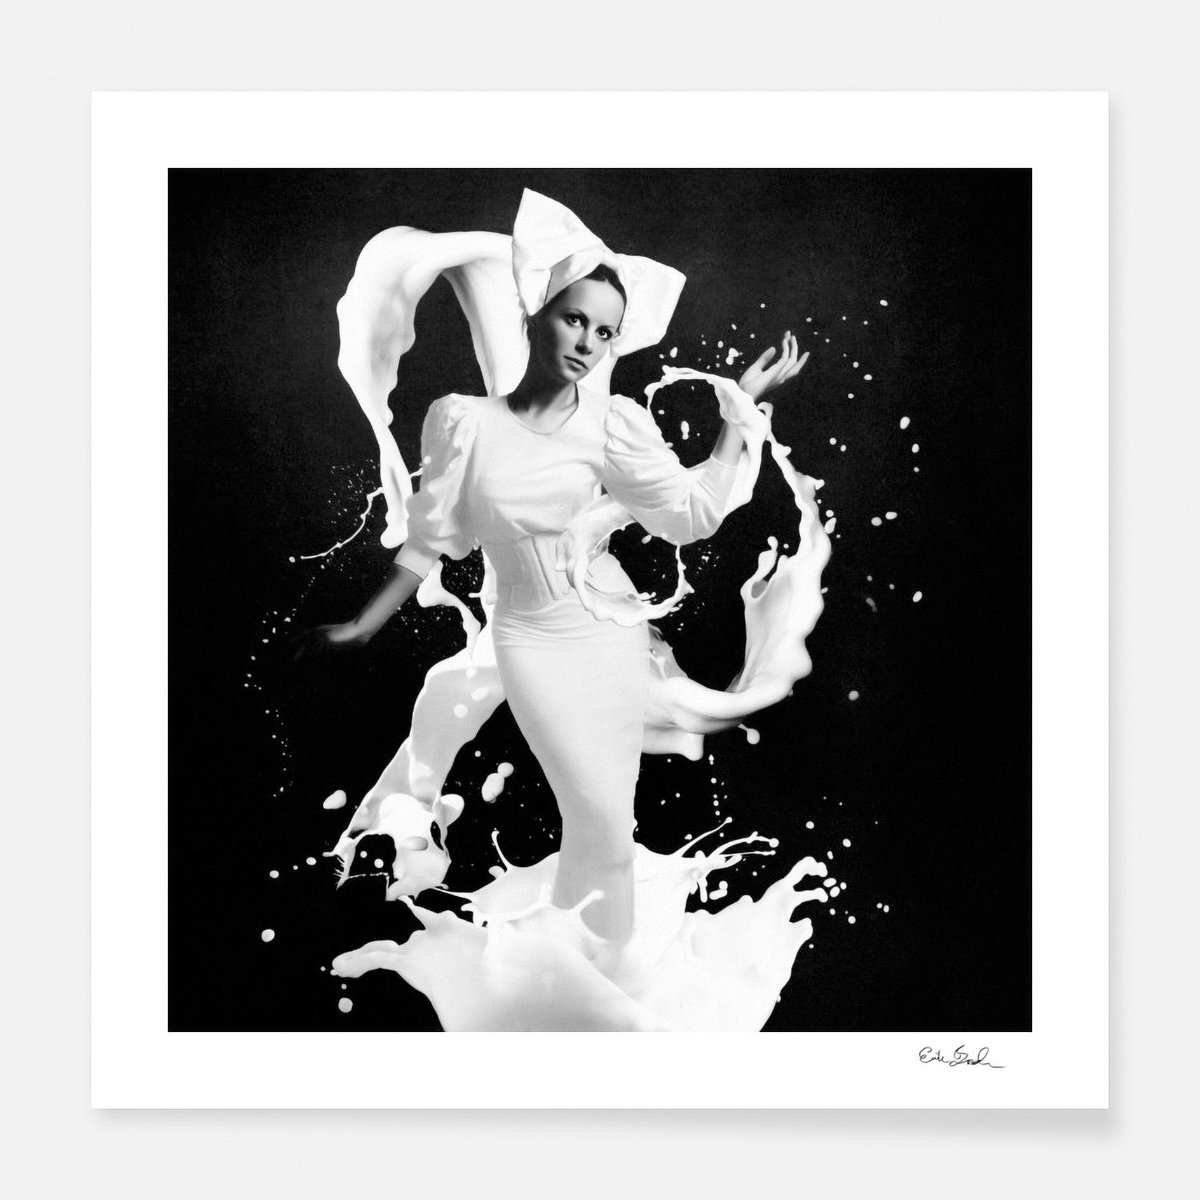 Unique exhibition print of Milk - 120x120cm Chromogenic print on Kodak Endura Pro - One of a kind and free worldwide shipping - make an offer at erikbrede.com/artshop/milk-b… #bigprint #oneofakind #art #fineart #whitewalls #contemporaryart #dreamhomedecor #dreamhome #dreamhomeinteriors